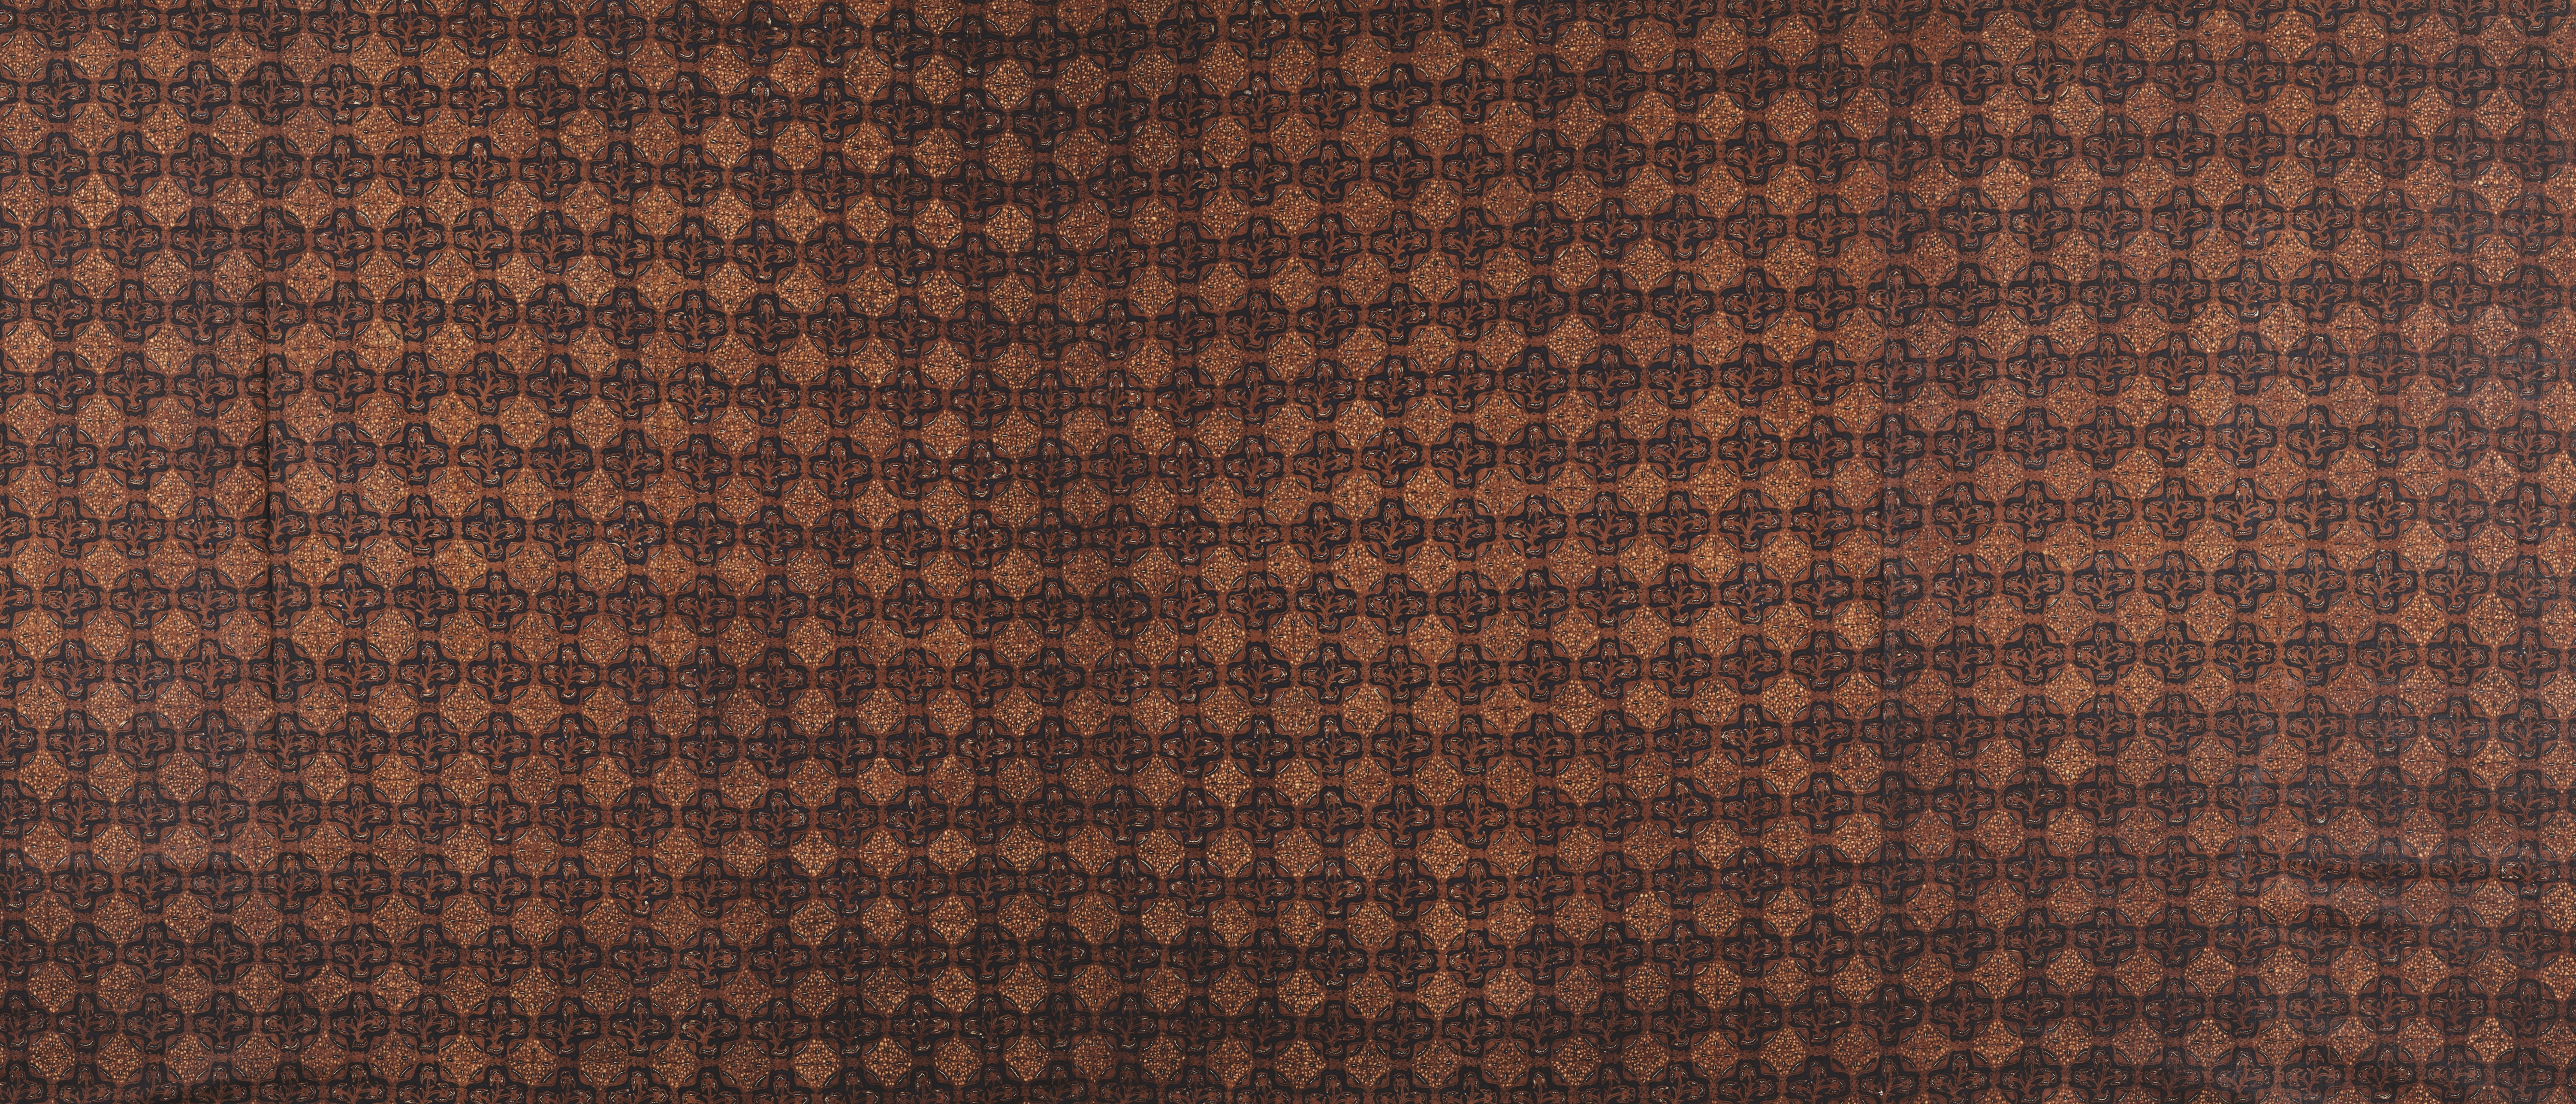 Ultra Wide Ultrawide Fabric Texture Pattern Symmetry 6006x2574